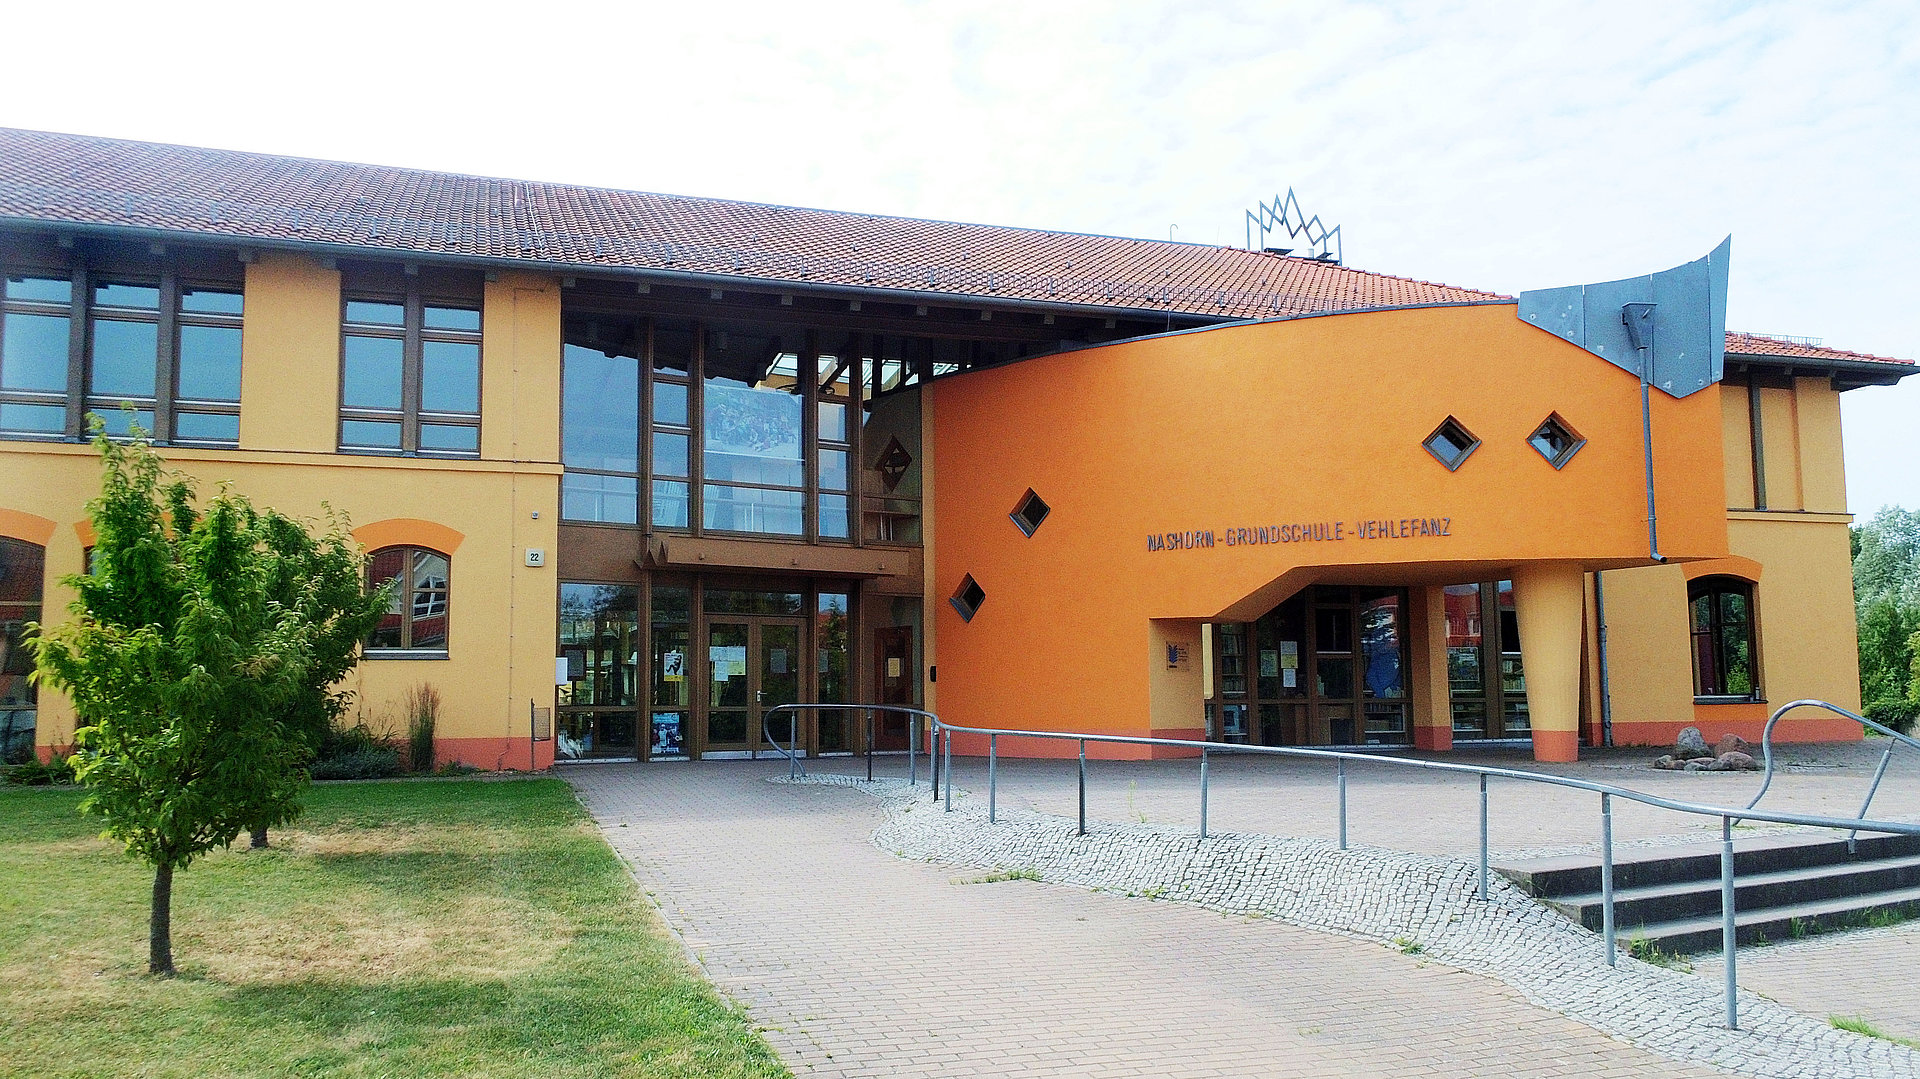 Nashorn-Grundschule Vehlefanz